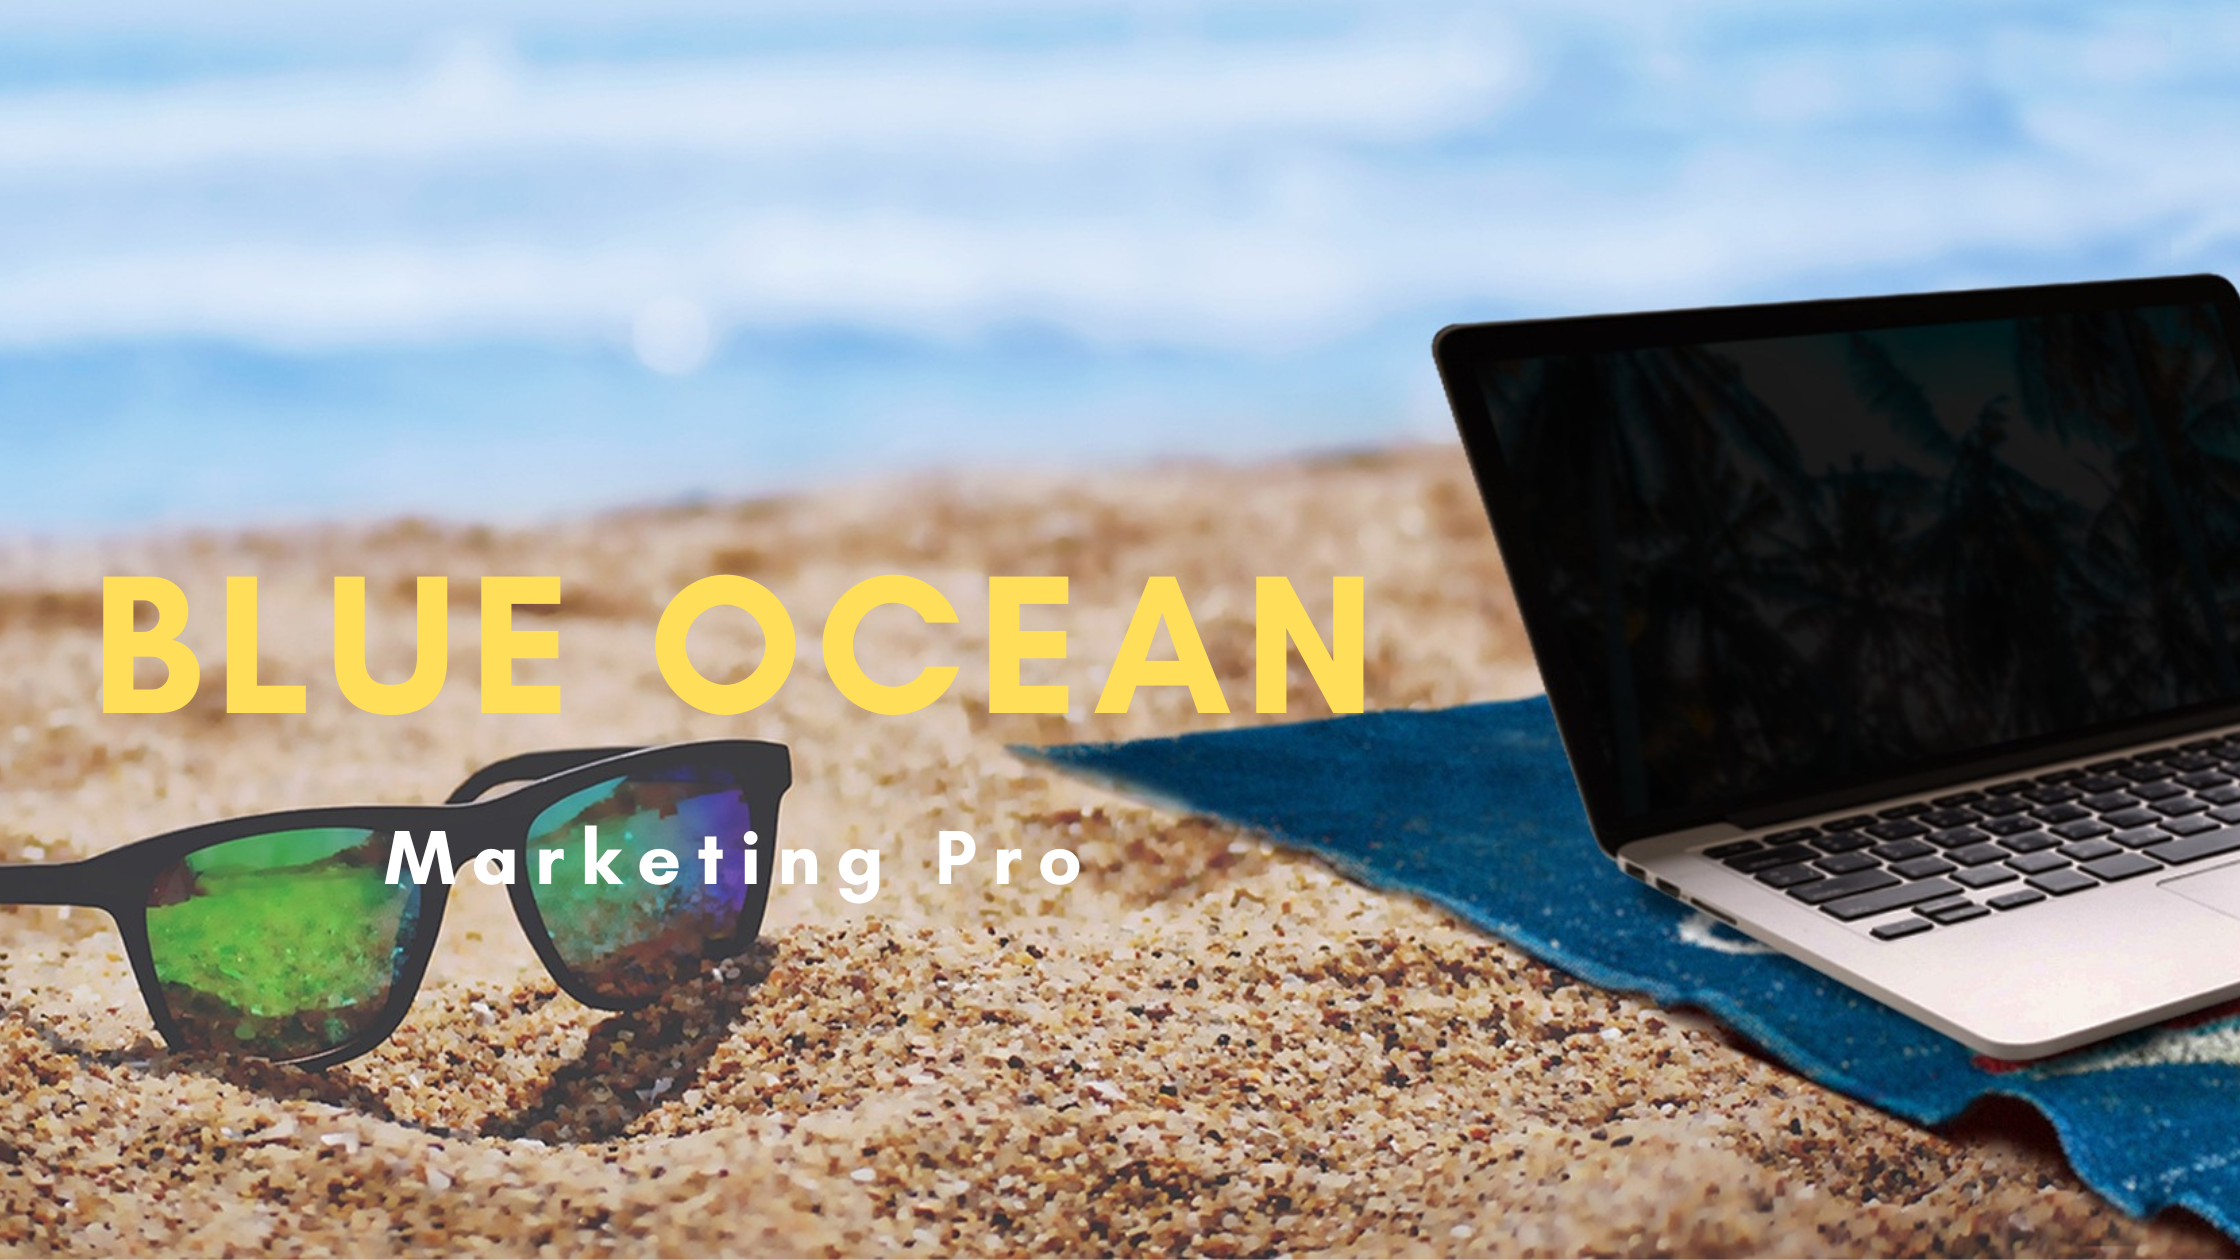 Blue Ocean Marketing Pro